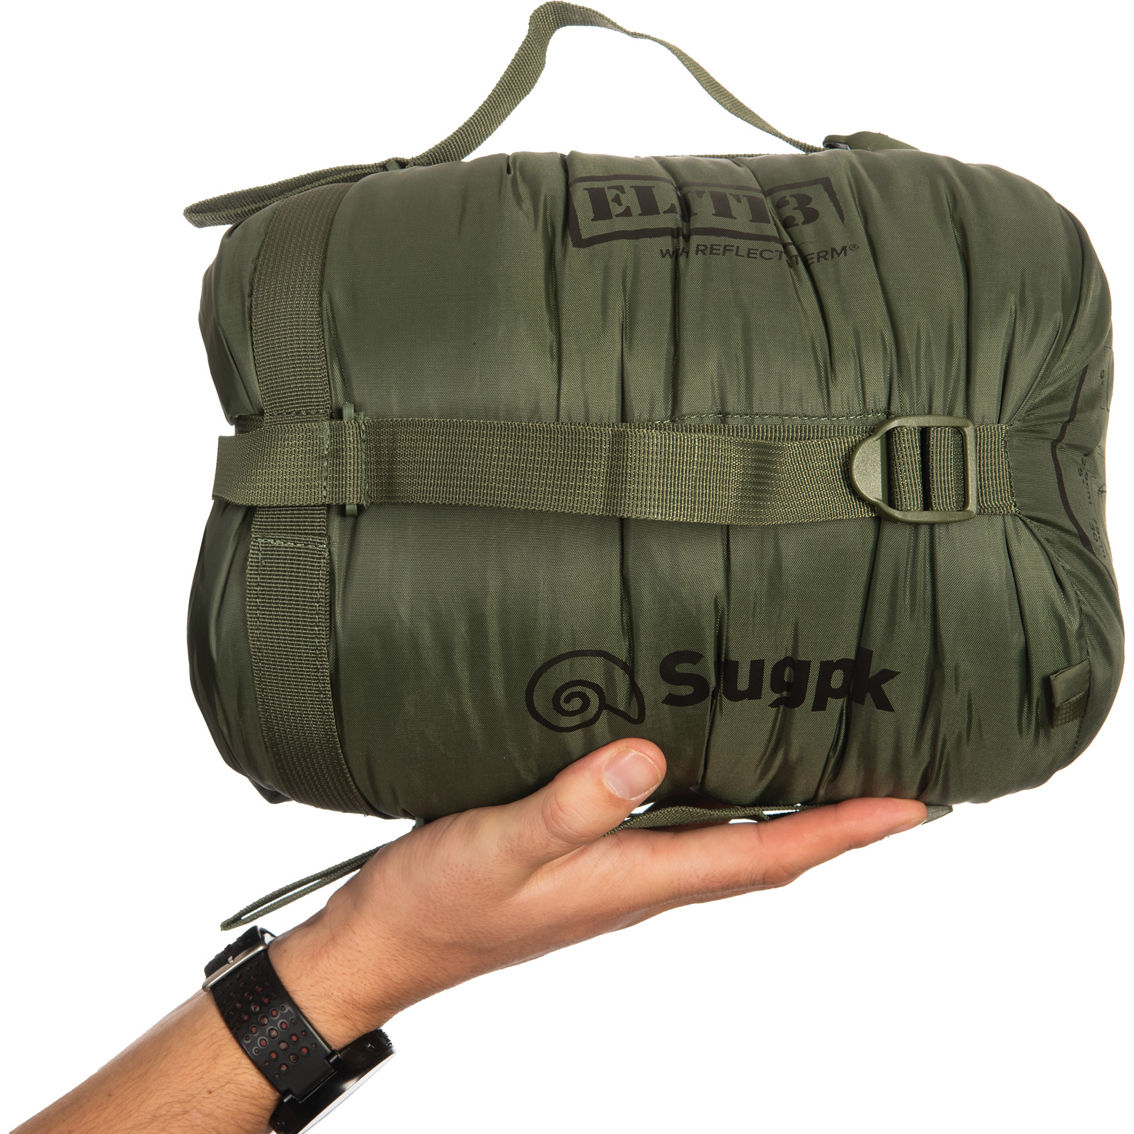 SnugPak Softie Elite 3 Right Zip Sleeping Bag - Image 5 of 5